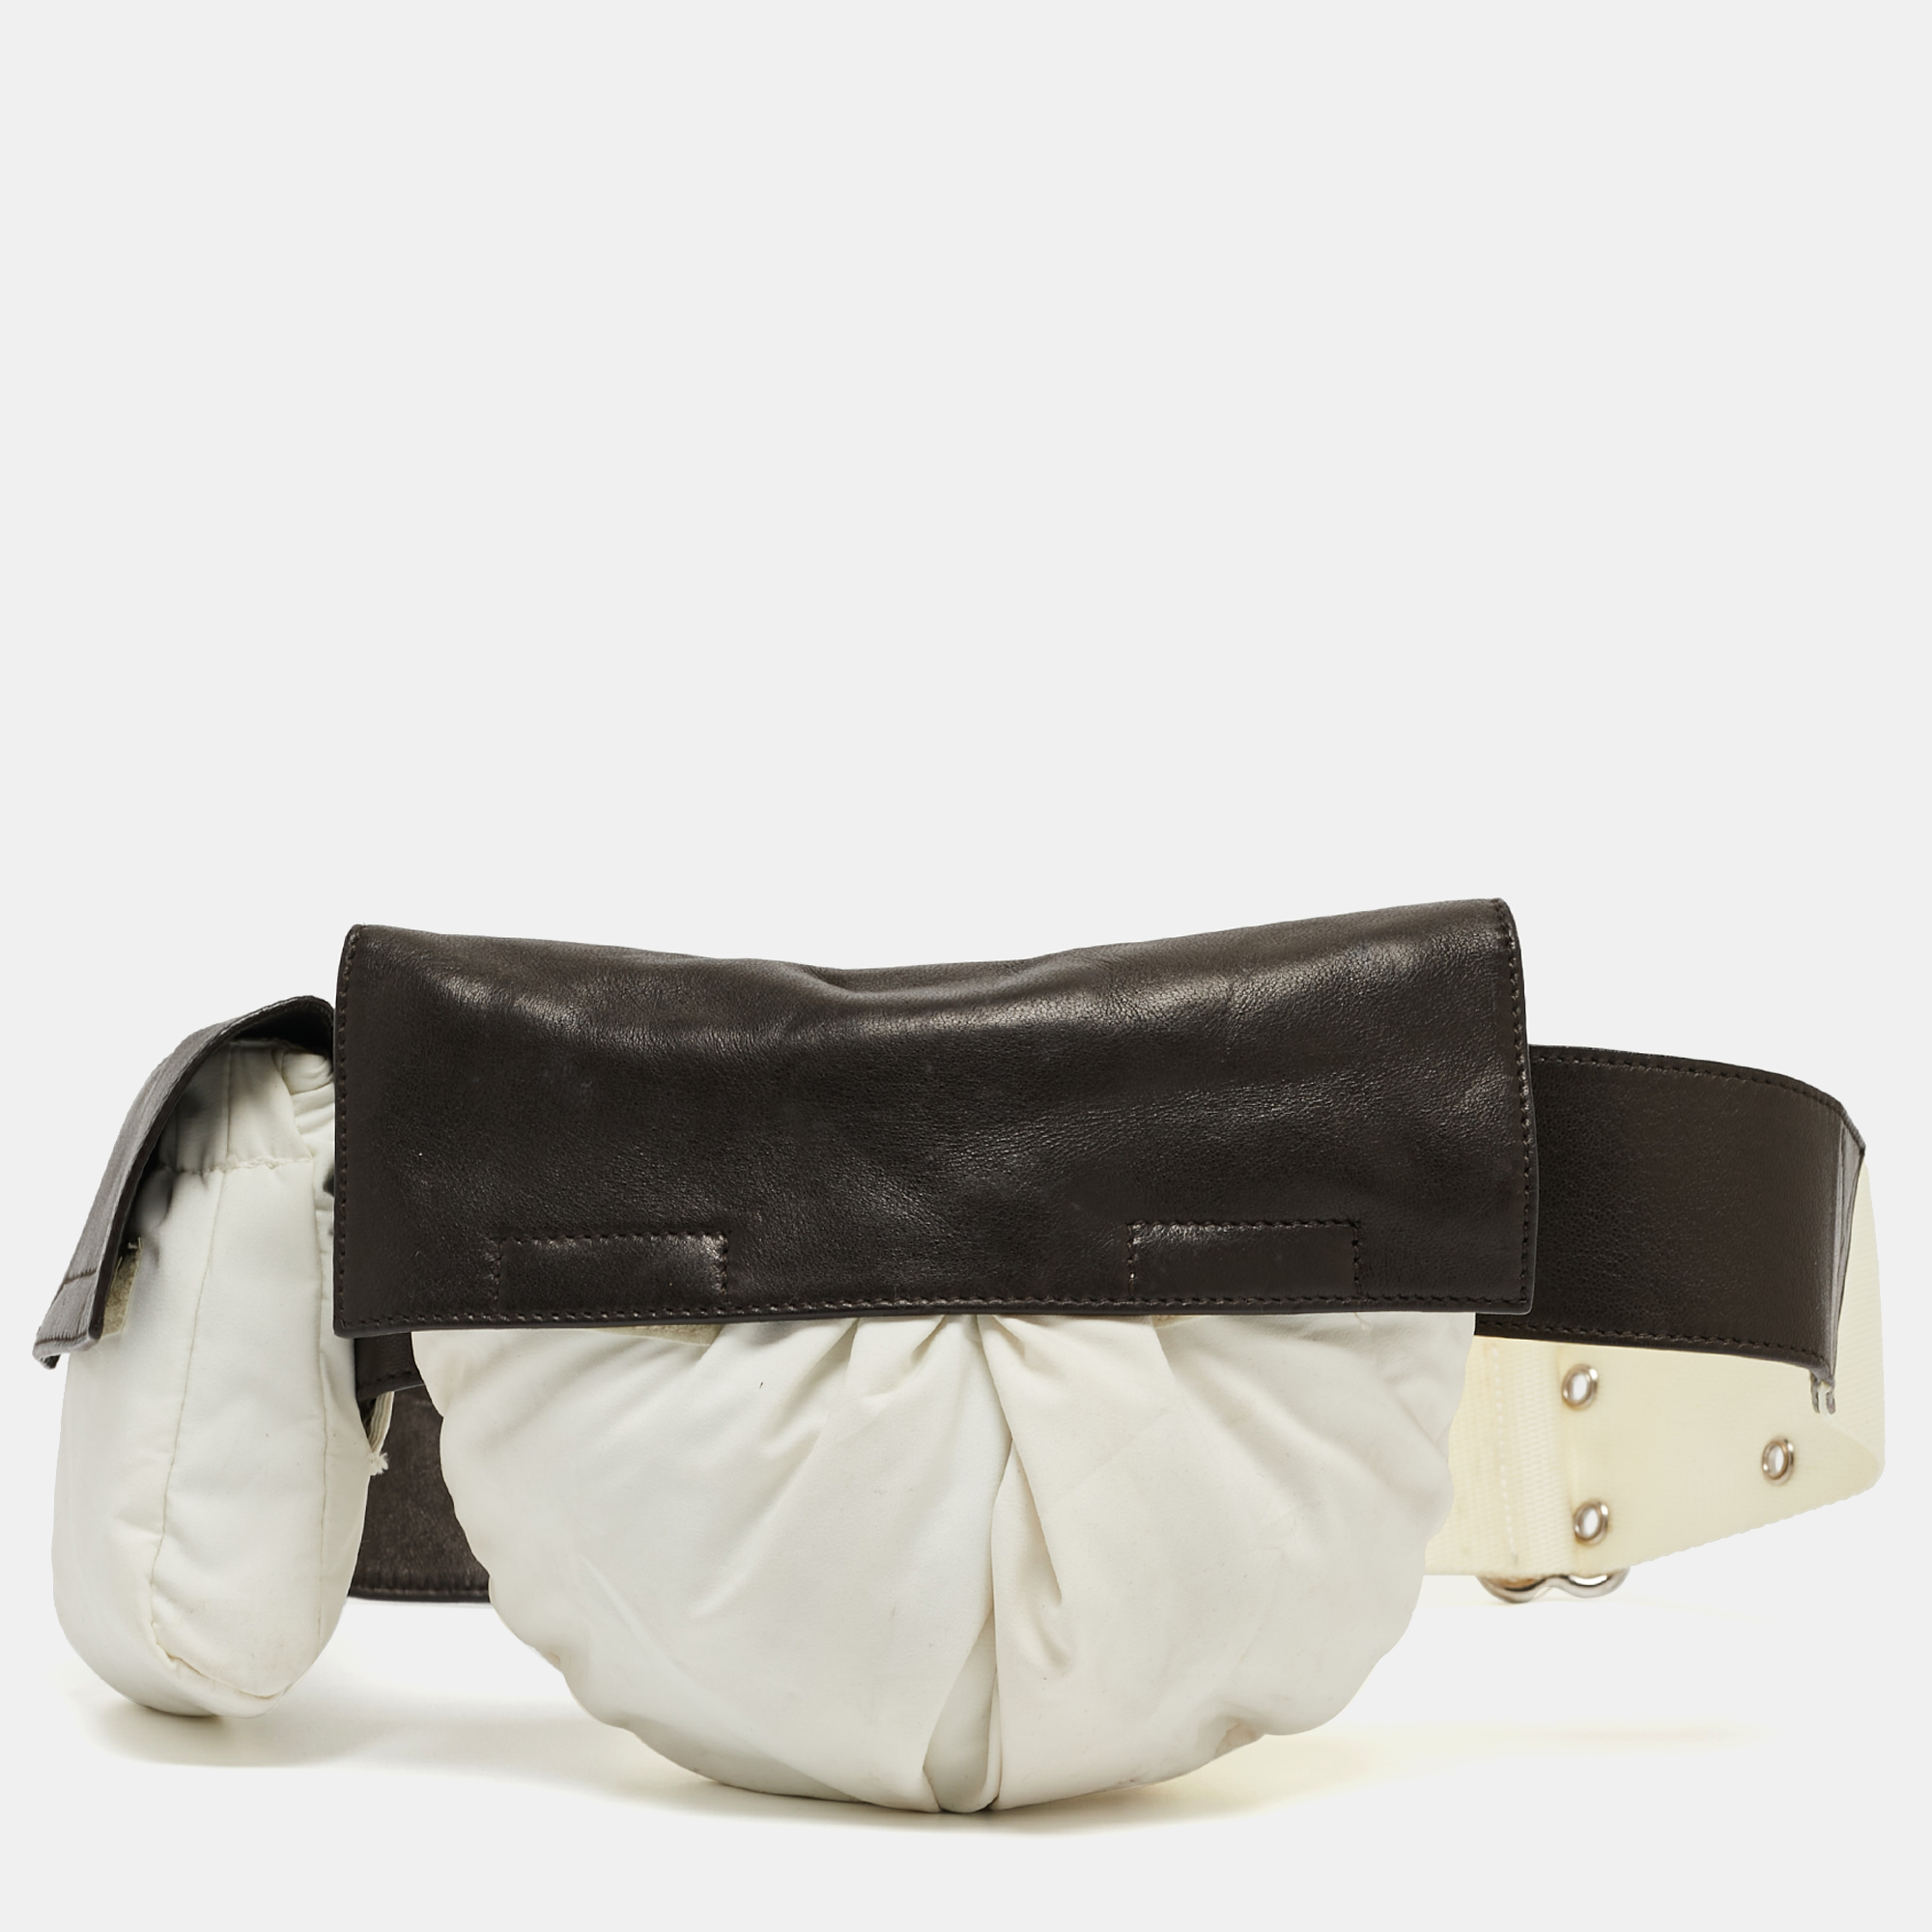 Prada sport white/brown nylon and leather belt bag